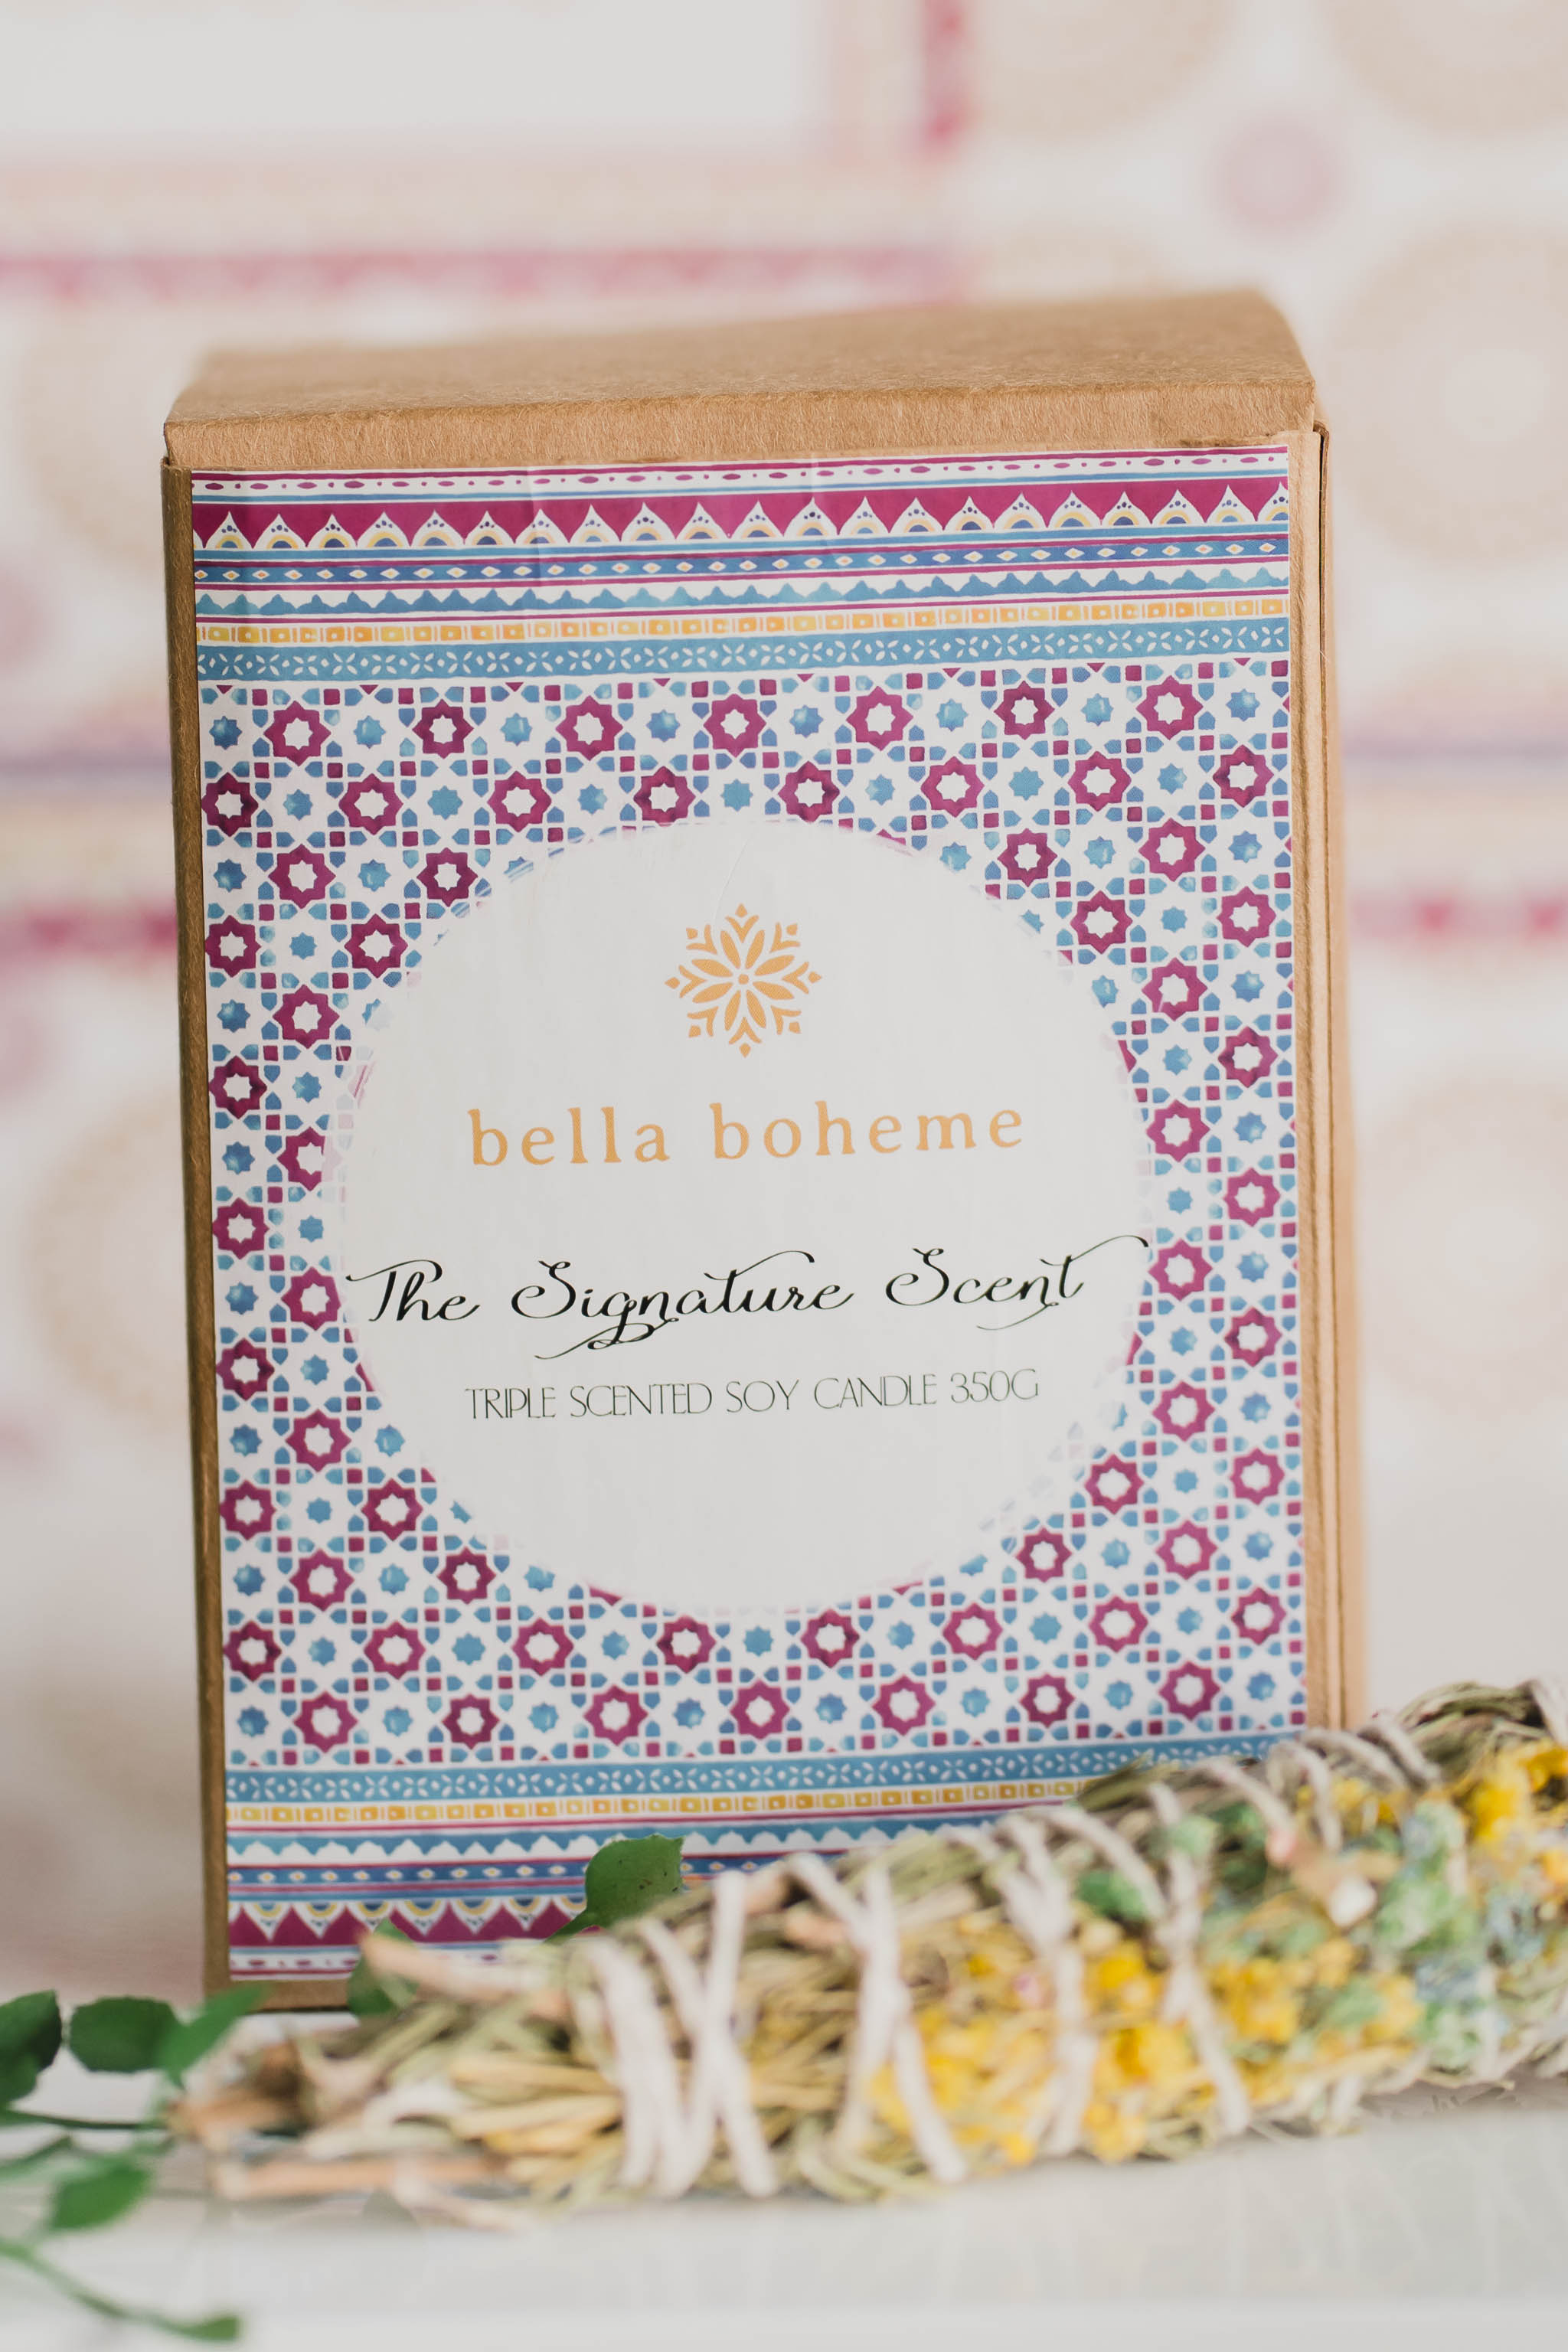 Bella Boheme Candle - Signature Scent